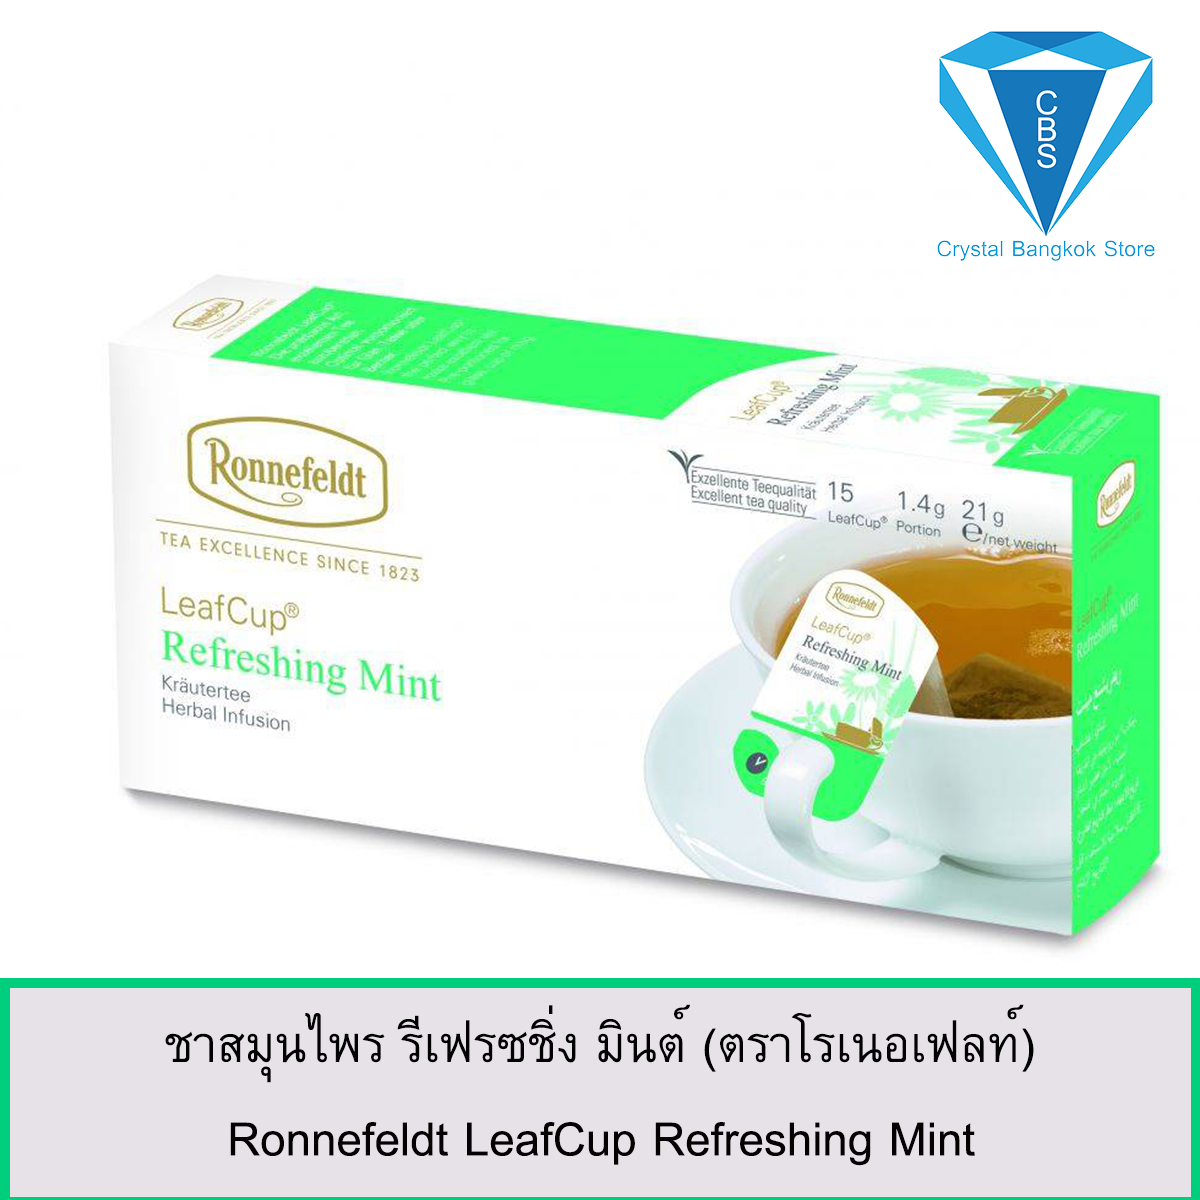 Ronnefeldt LeafCup Refreshing Mint โรเนอเฟลท์ ลีฟ คัพ ชาสมุนไพร รีเฟรซชิ่ง มินต์ 15x1.2g ไม่มีคาเฟอีน